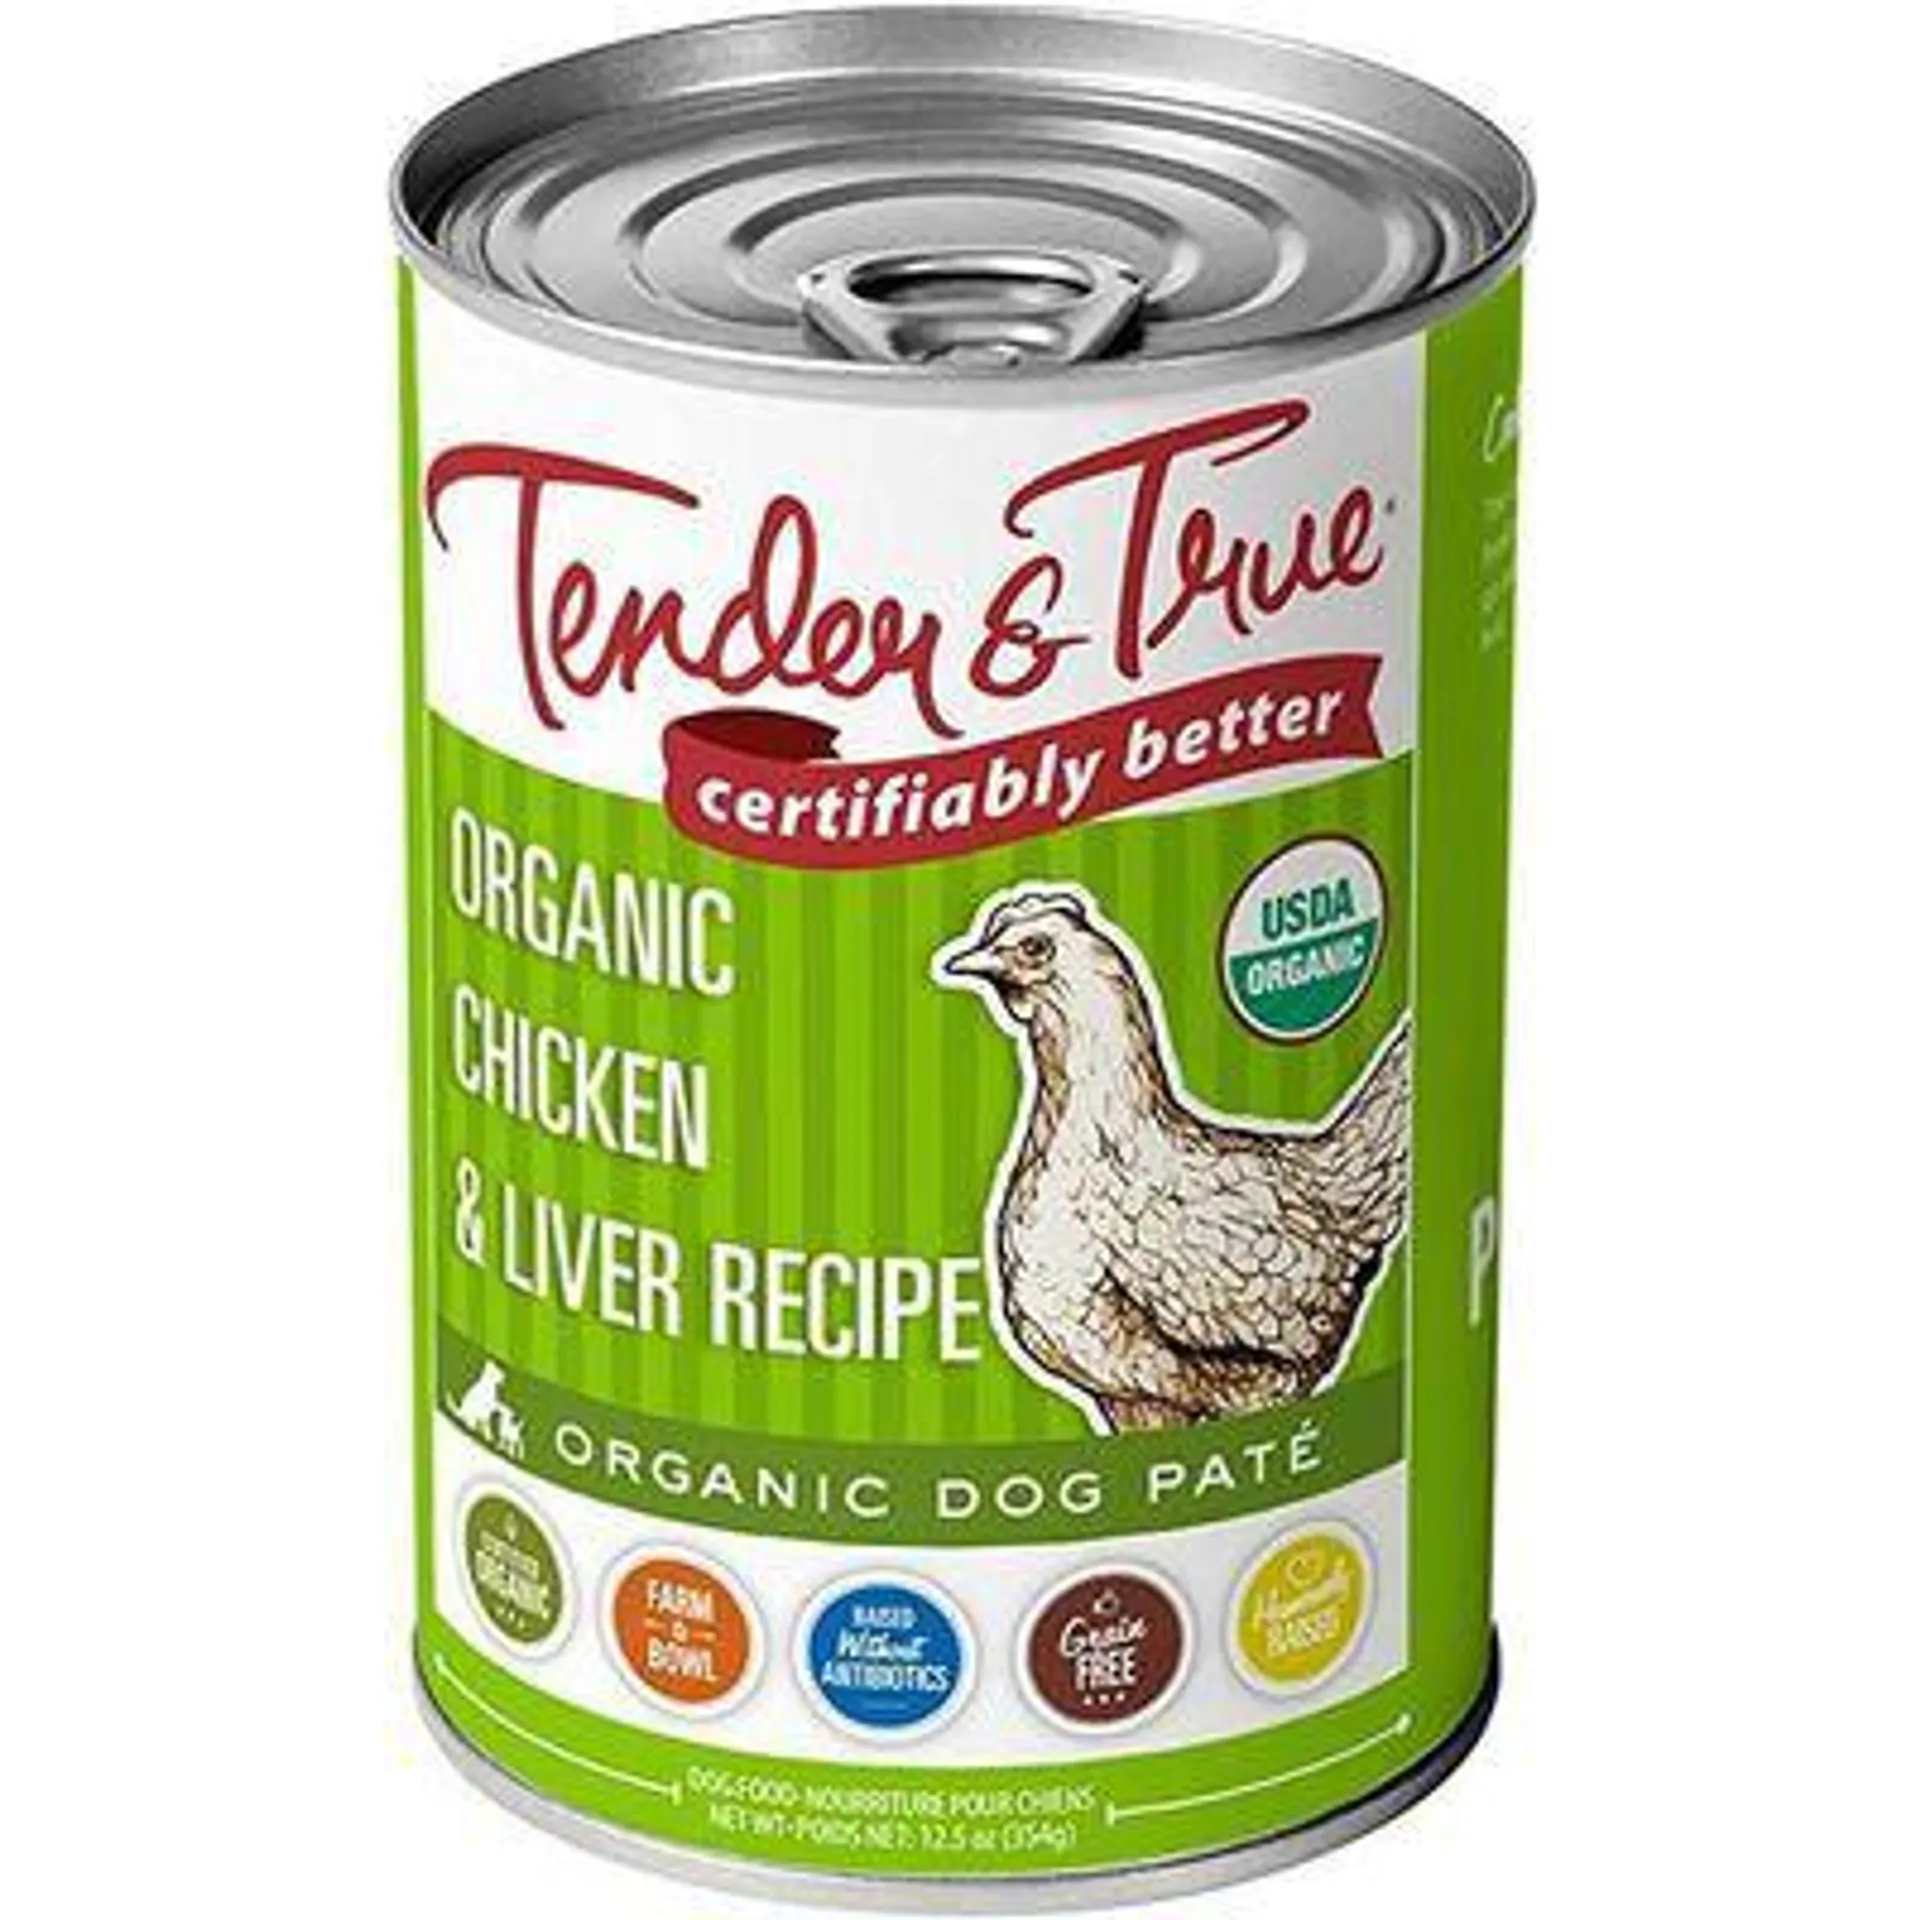 Tender & True Organic Chicken & Liver Dog Food